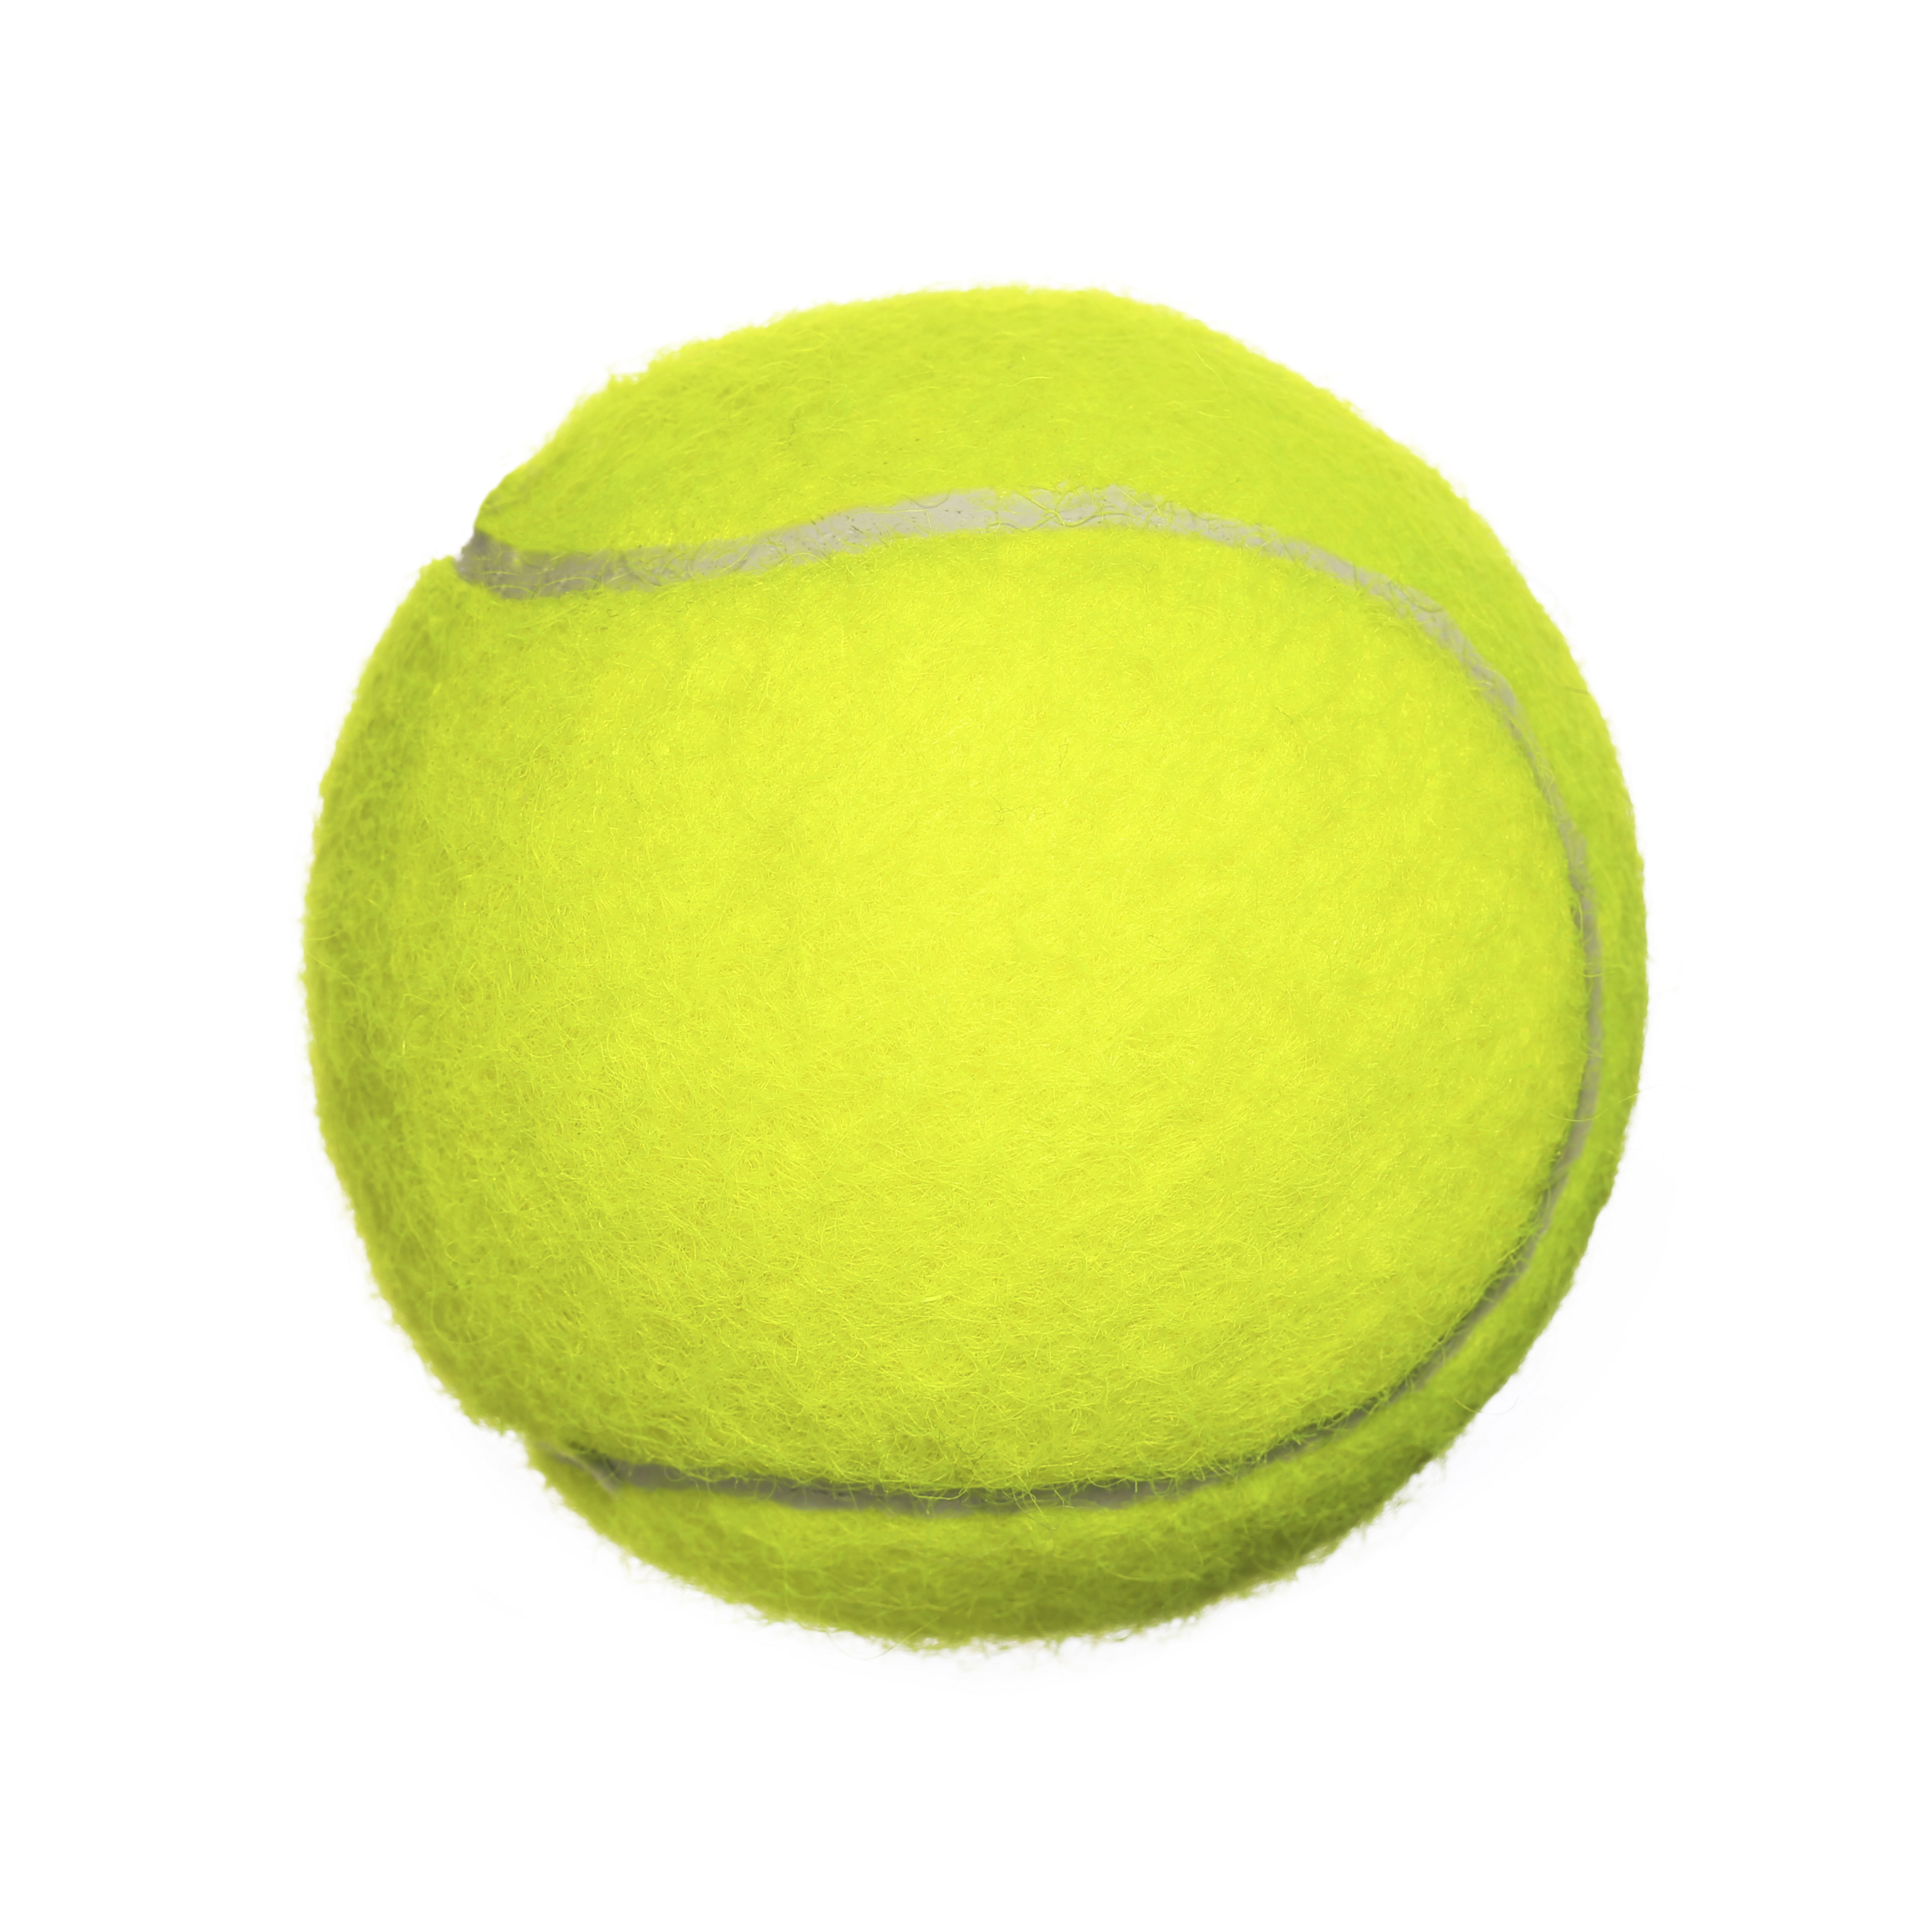 Tennis ball ball collection clipart